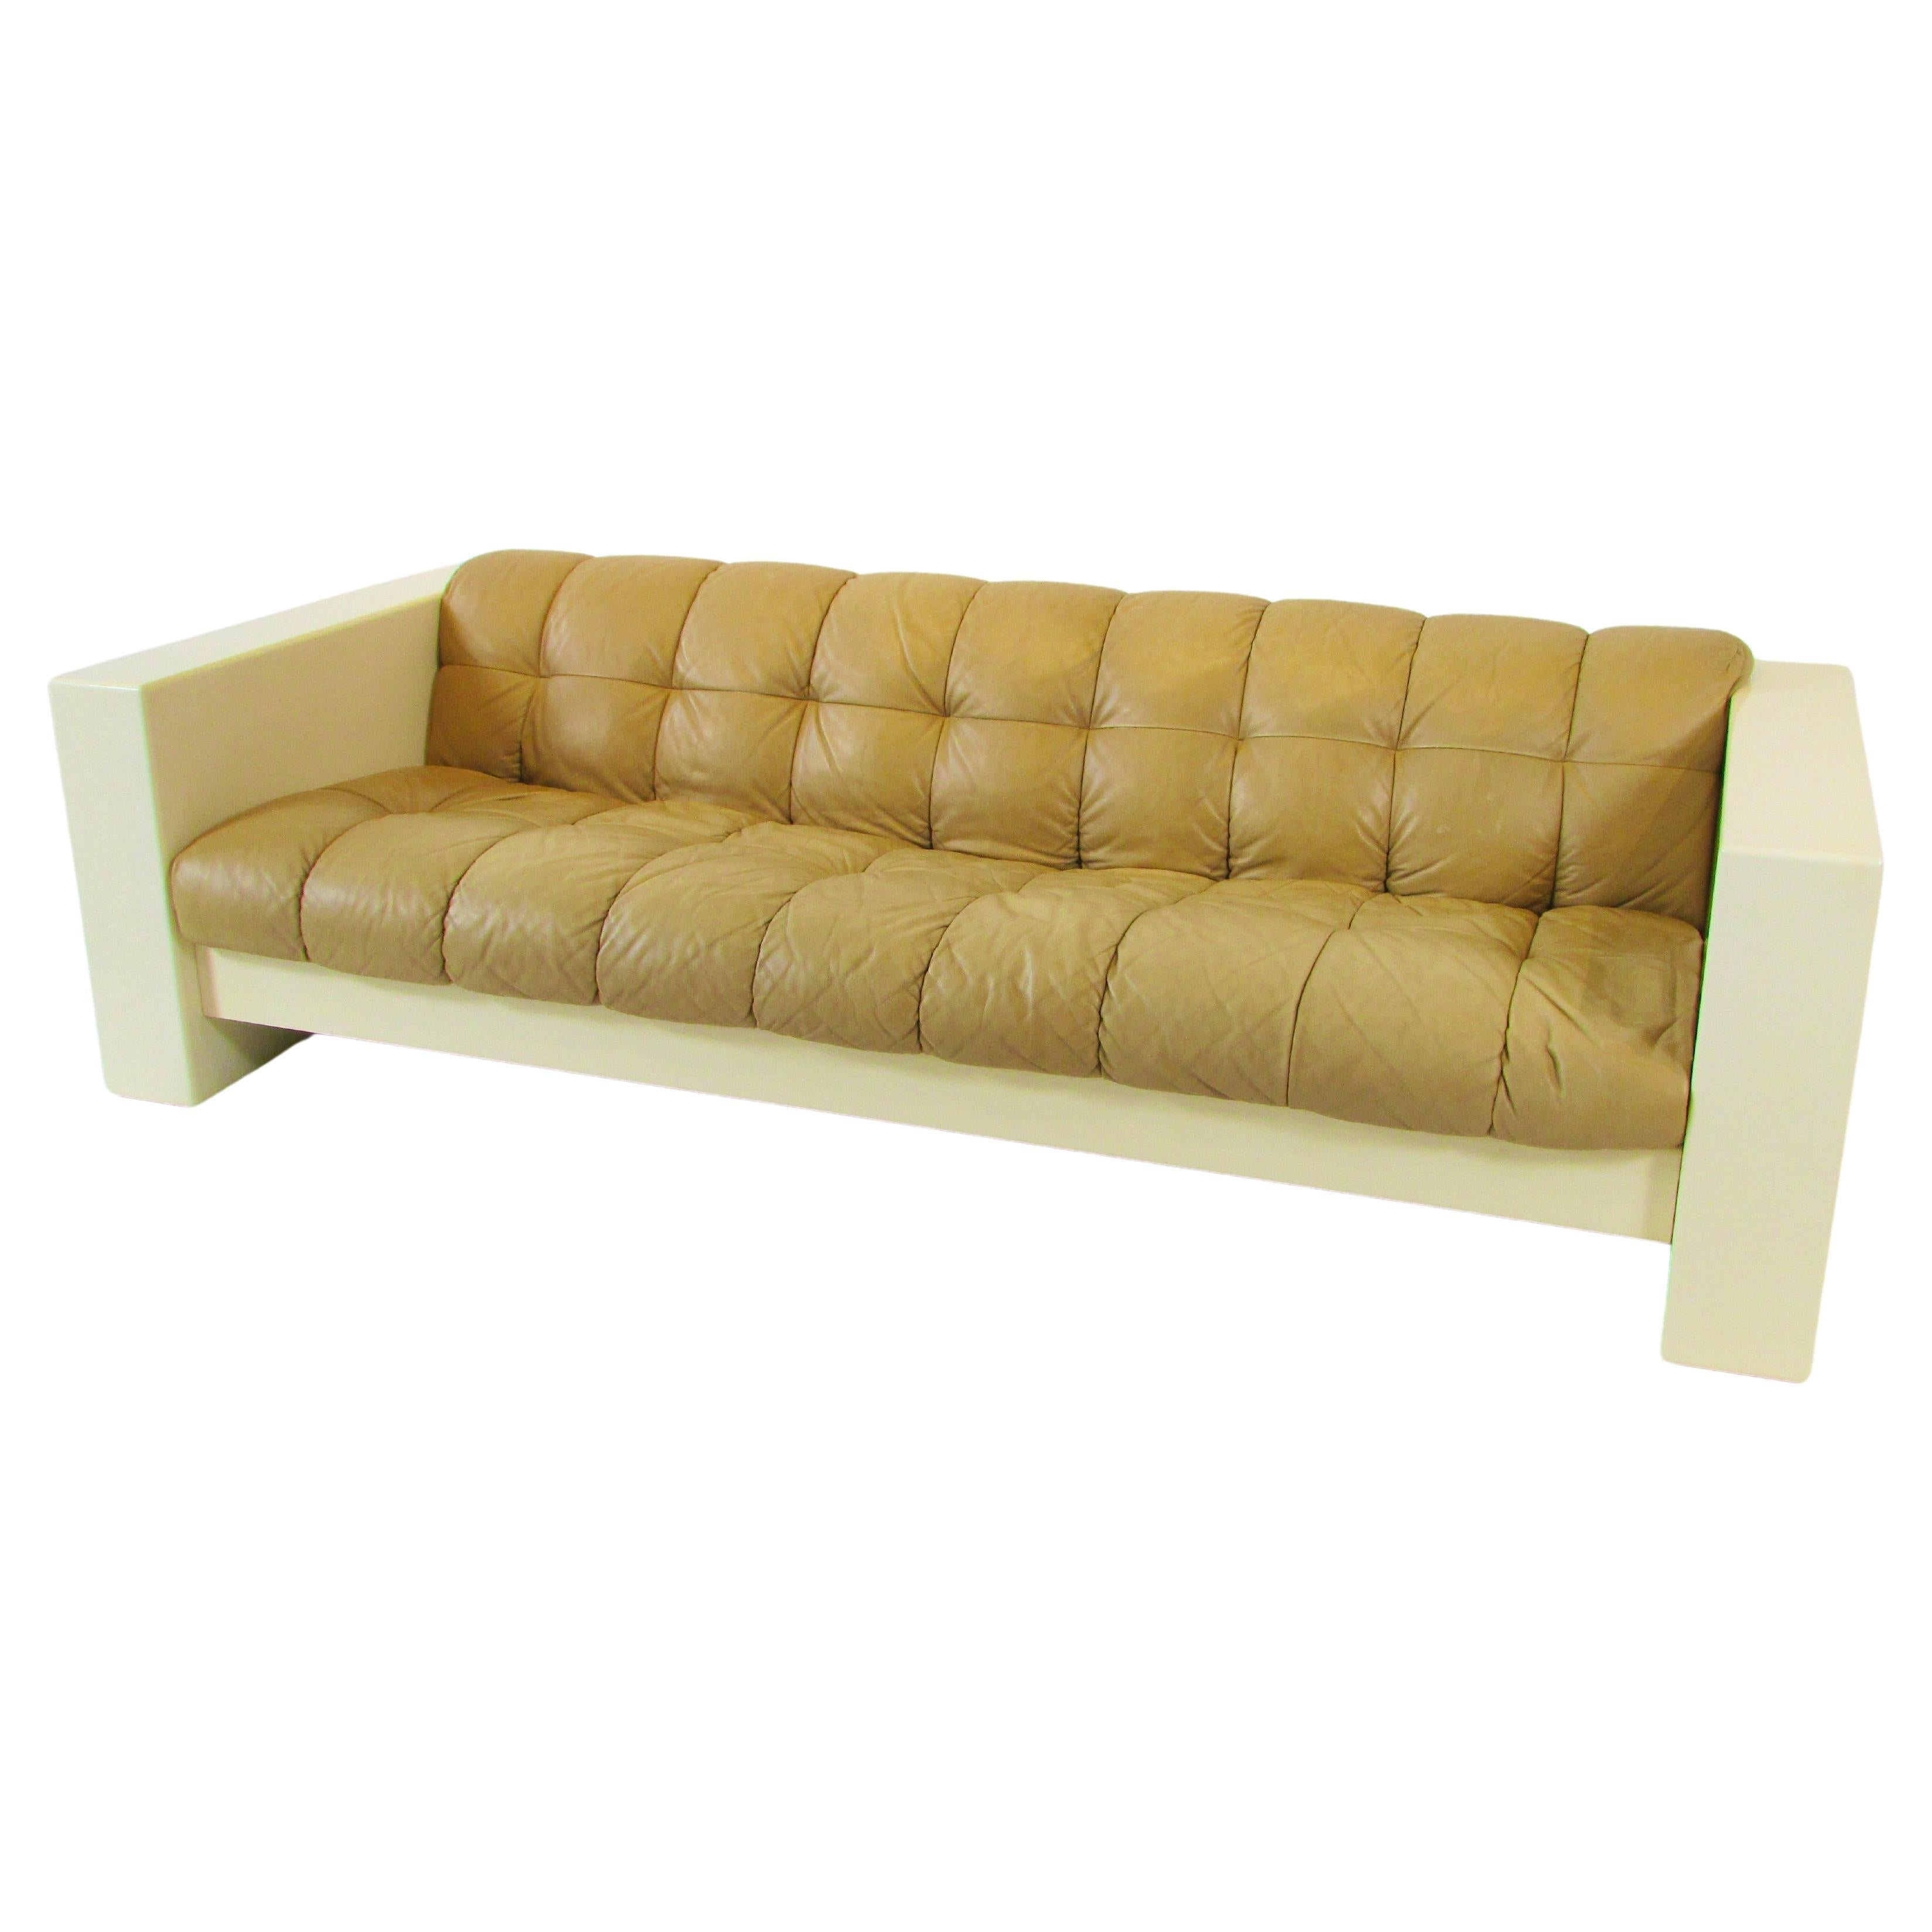 Jules Heumann  for Metropolitan furniture  leather sofa in fiberglass frame For Sale